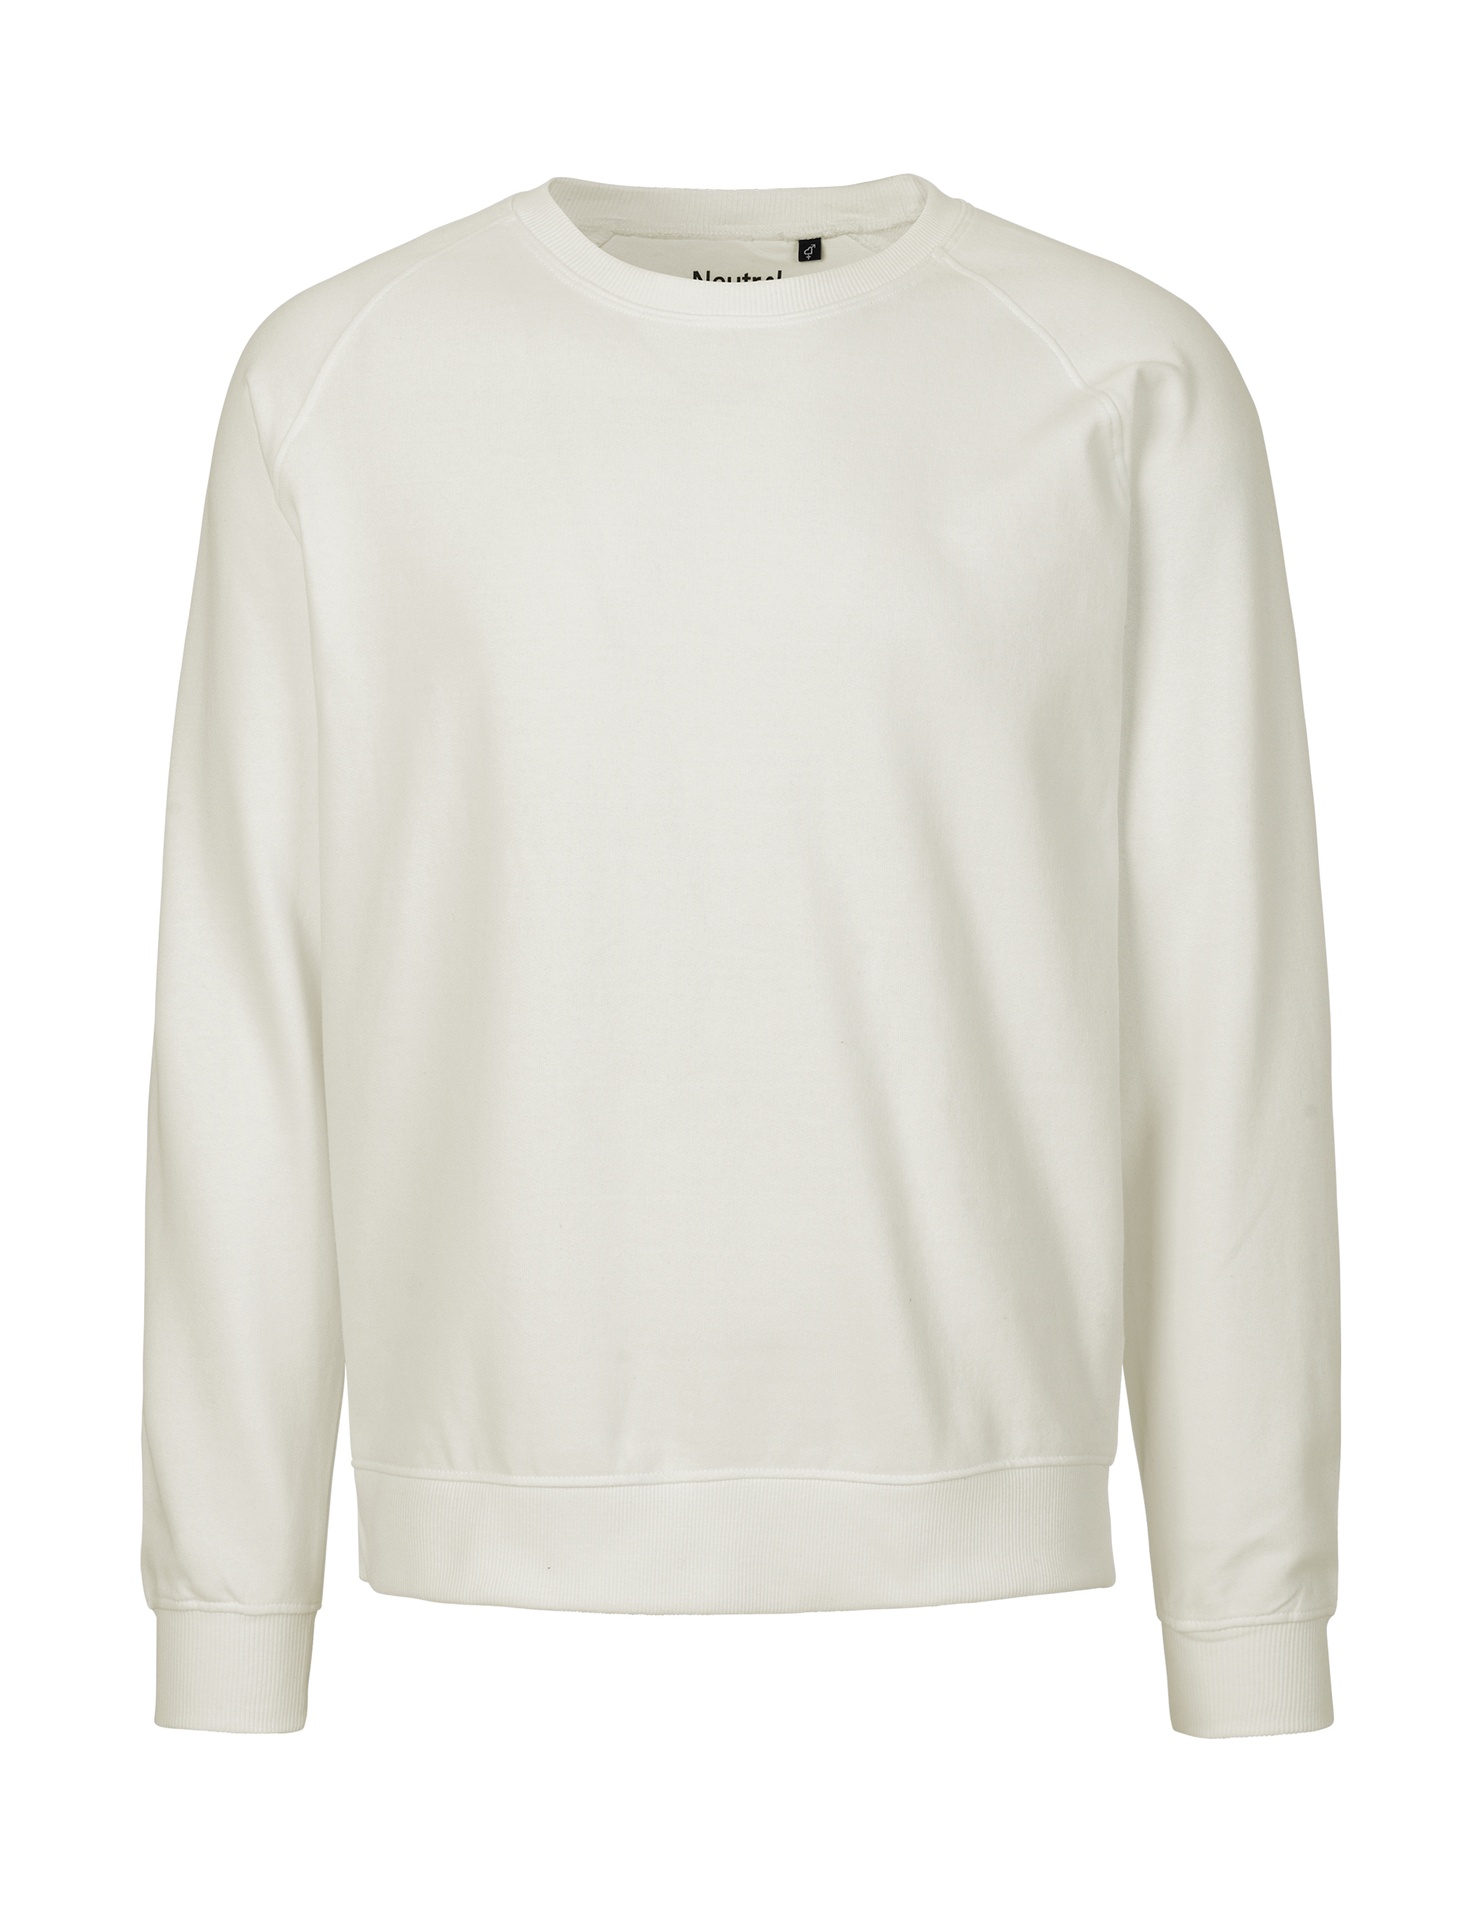 [PR/02645] Unisex Sweatshirt (Nature 00, M)